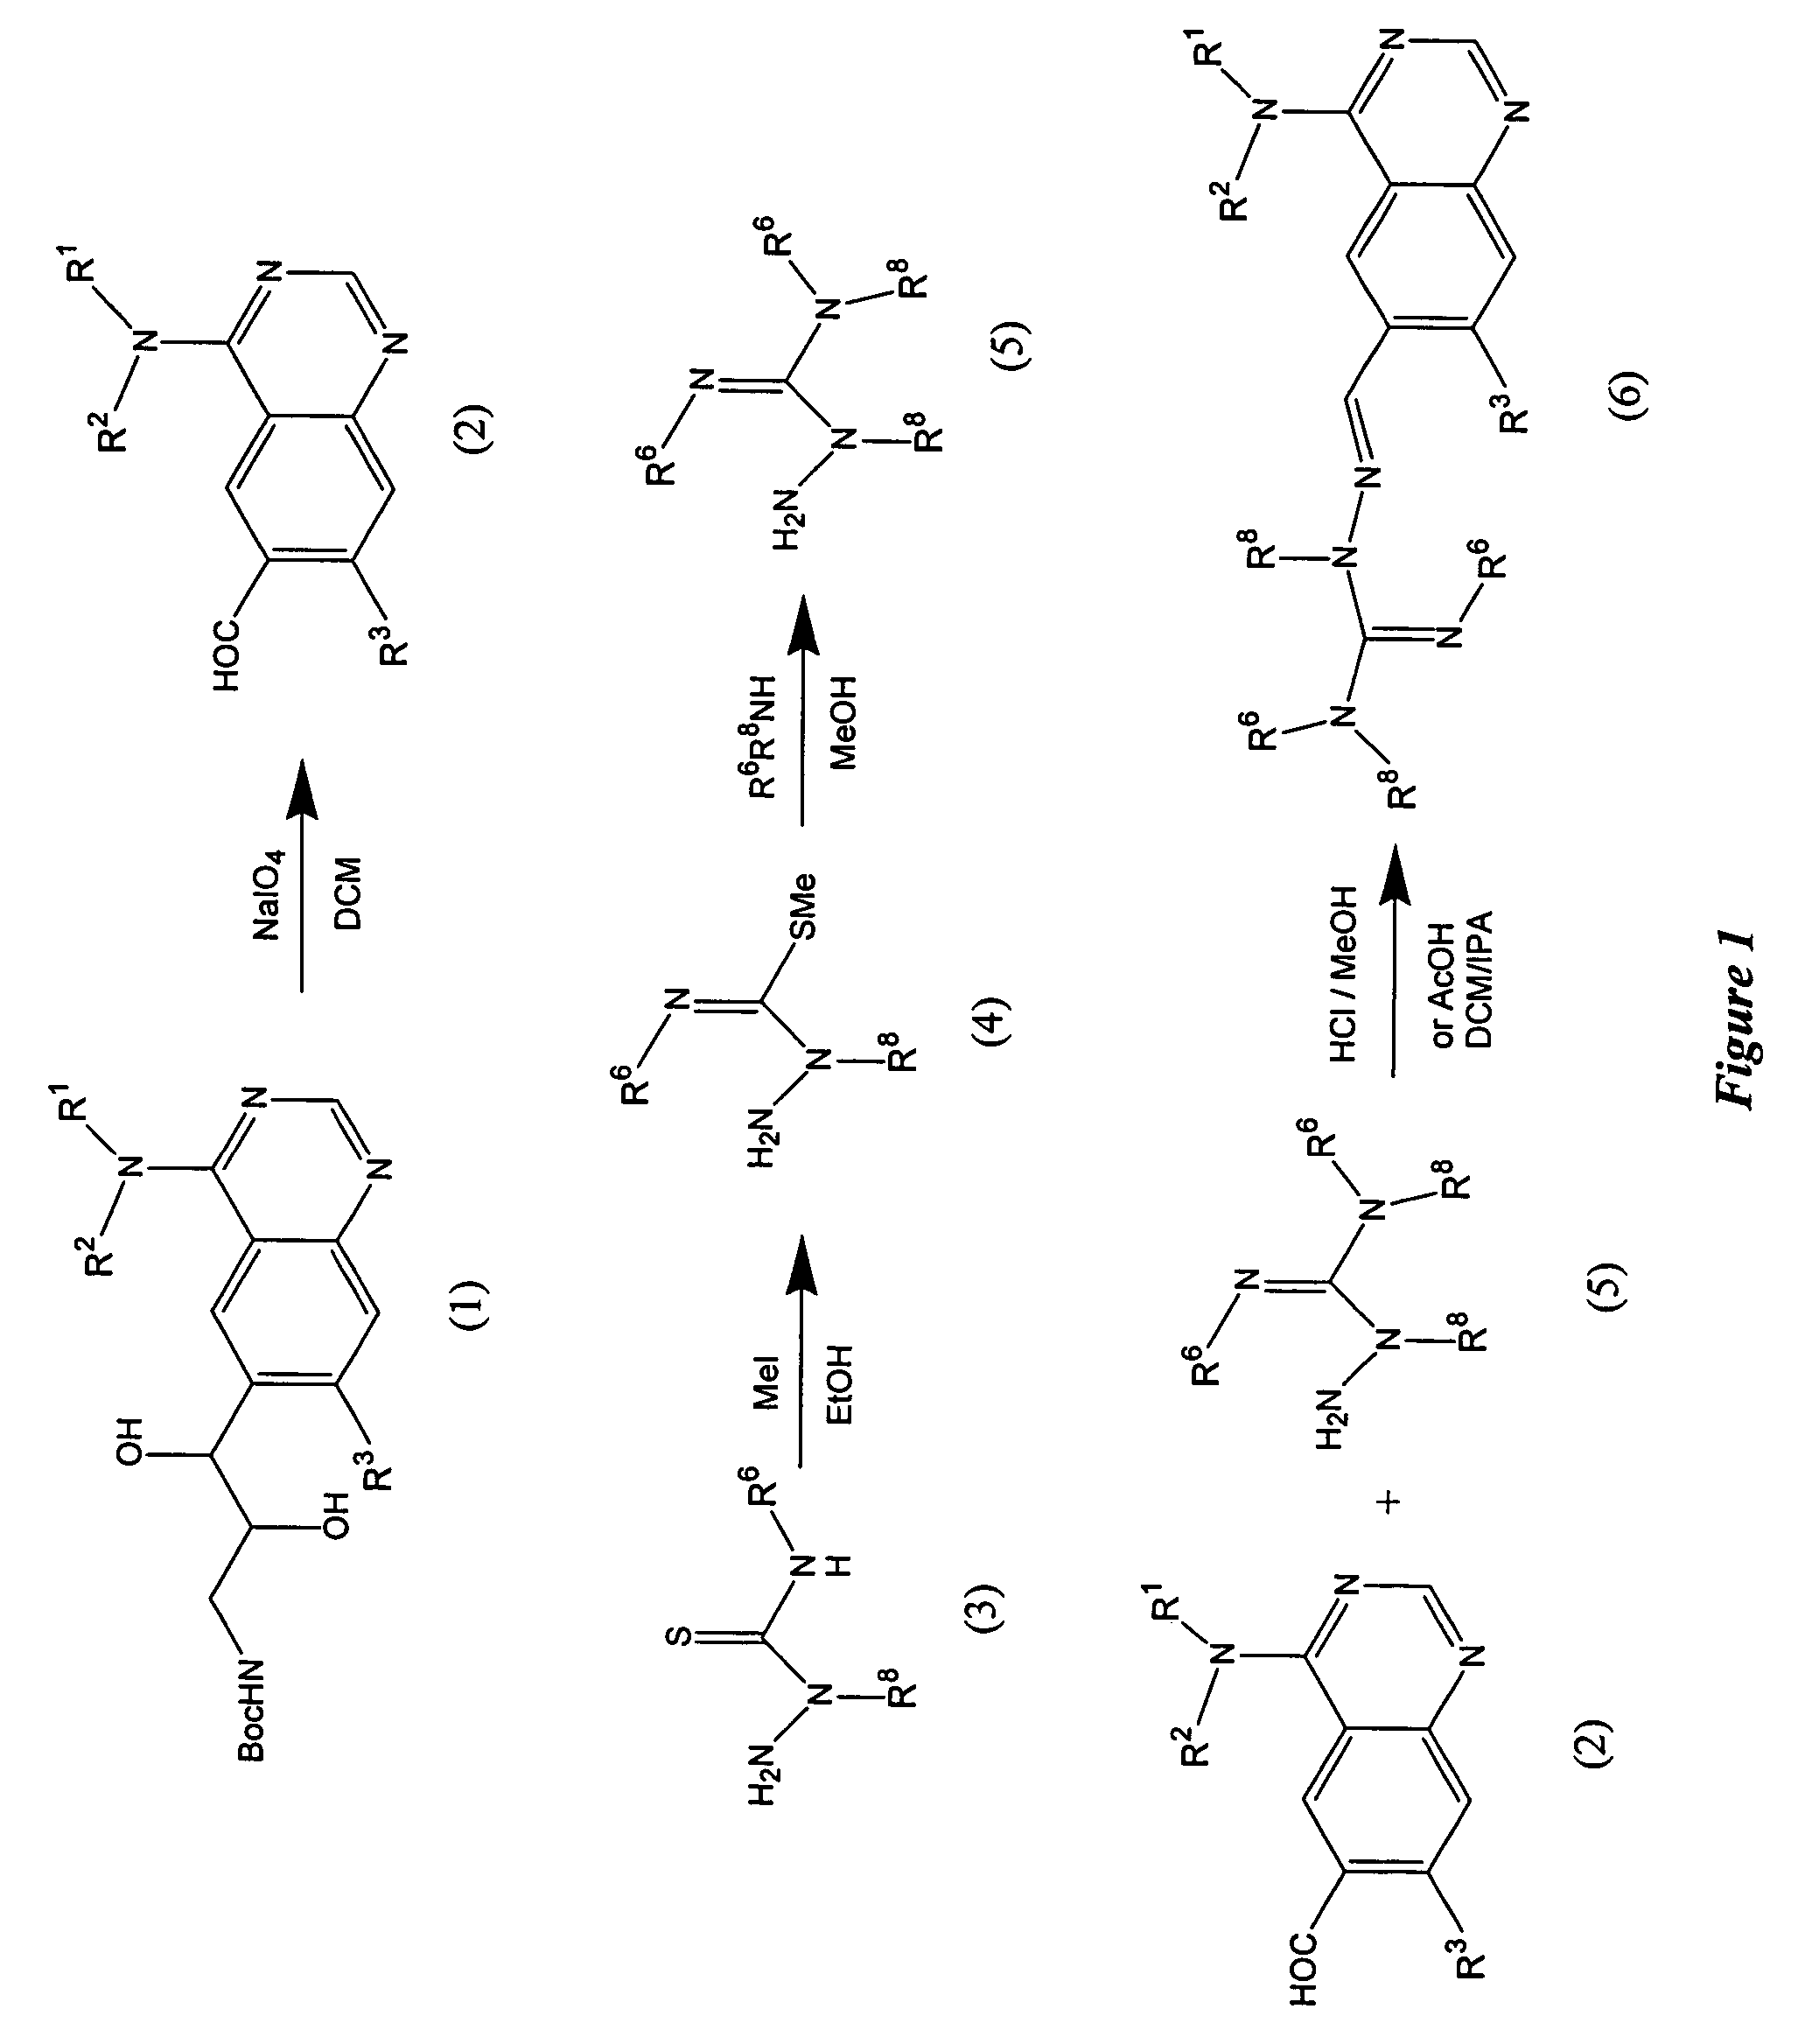 Quinazoline analogs as receptor tyrosine kinase inhibitors